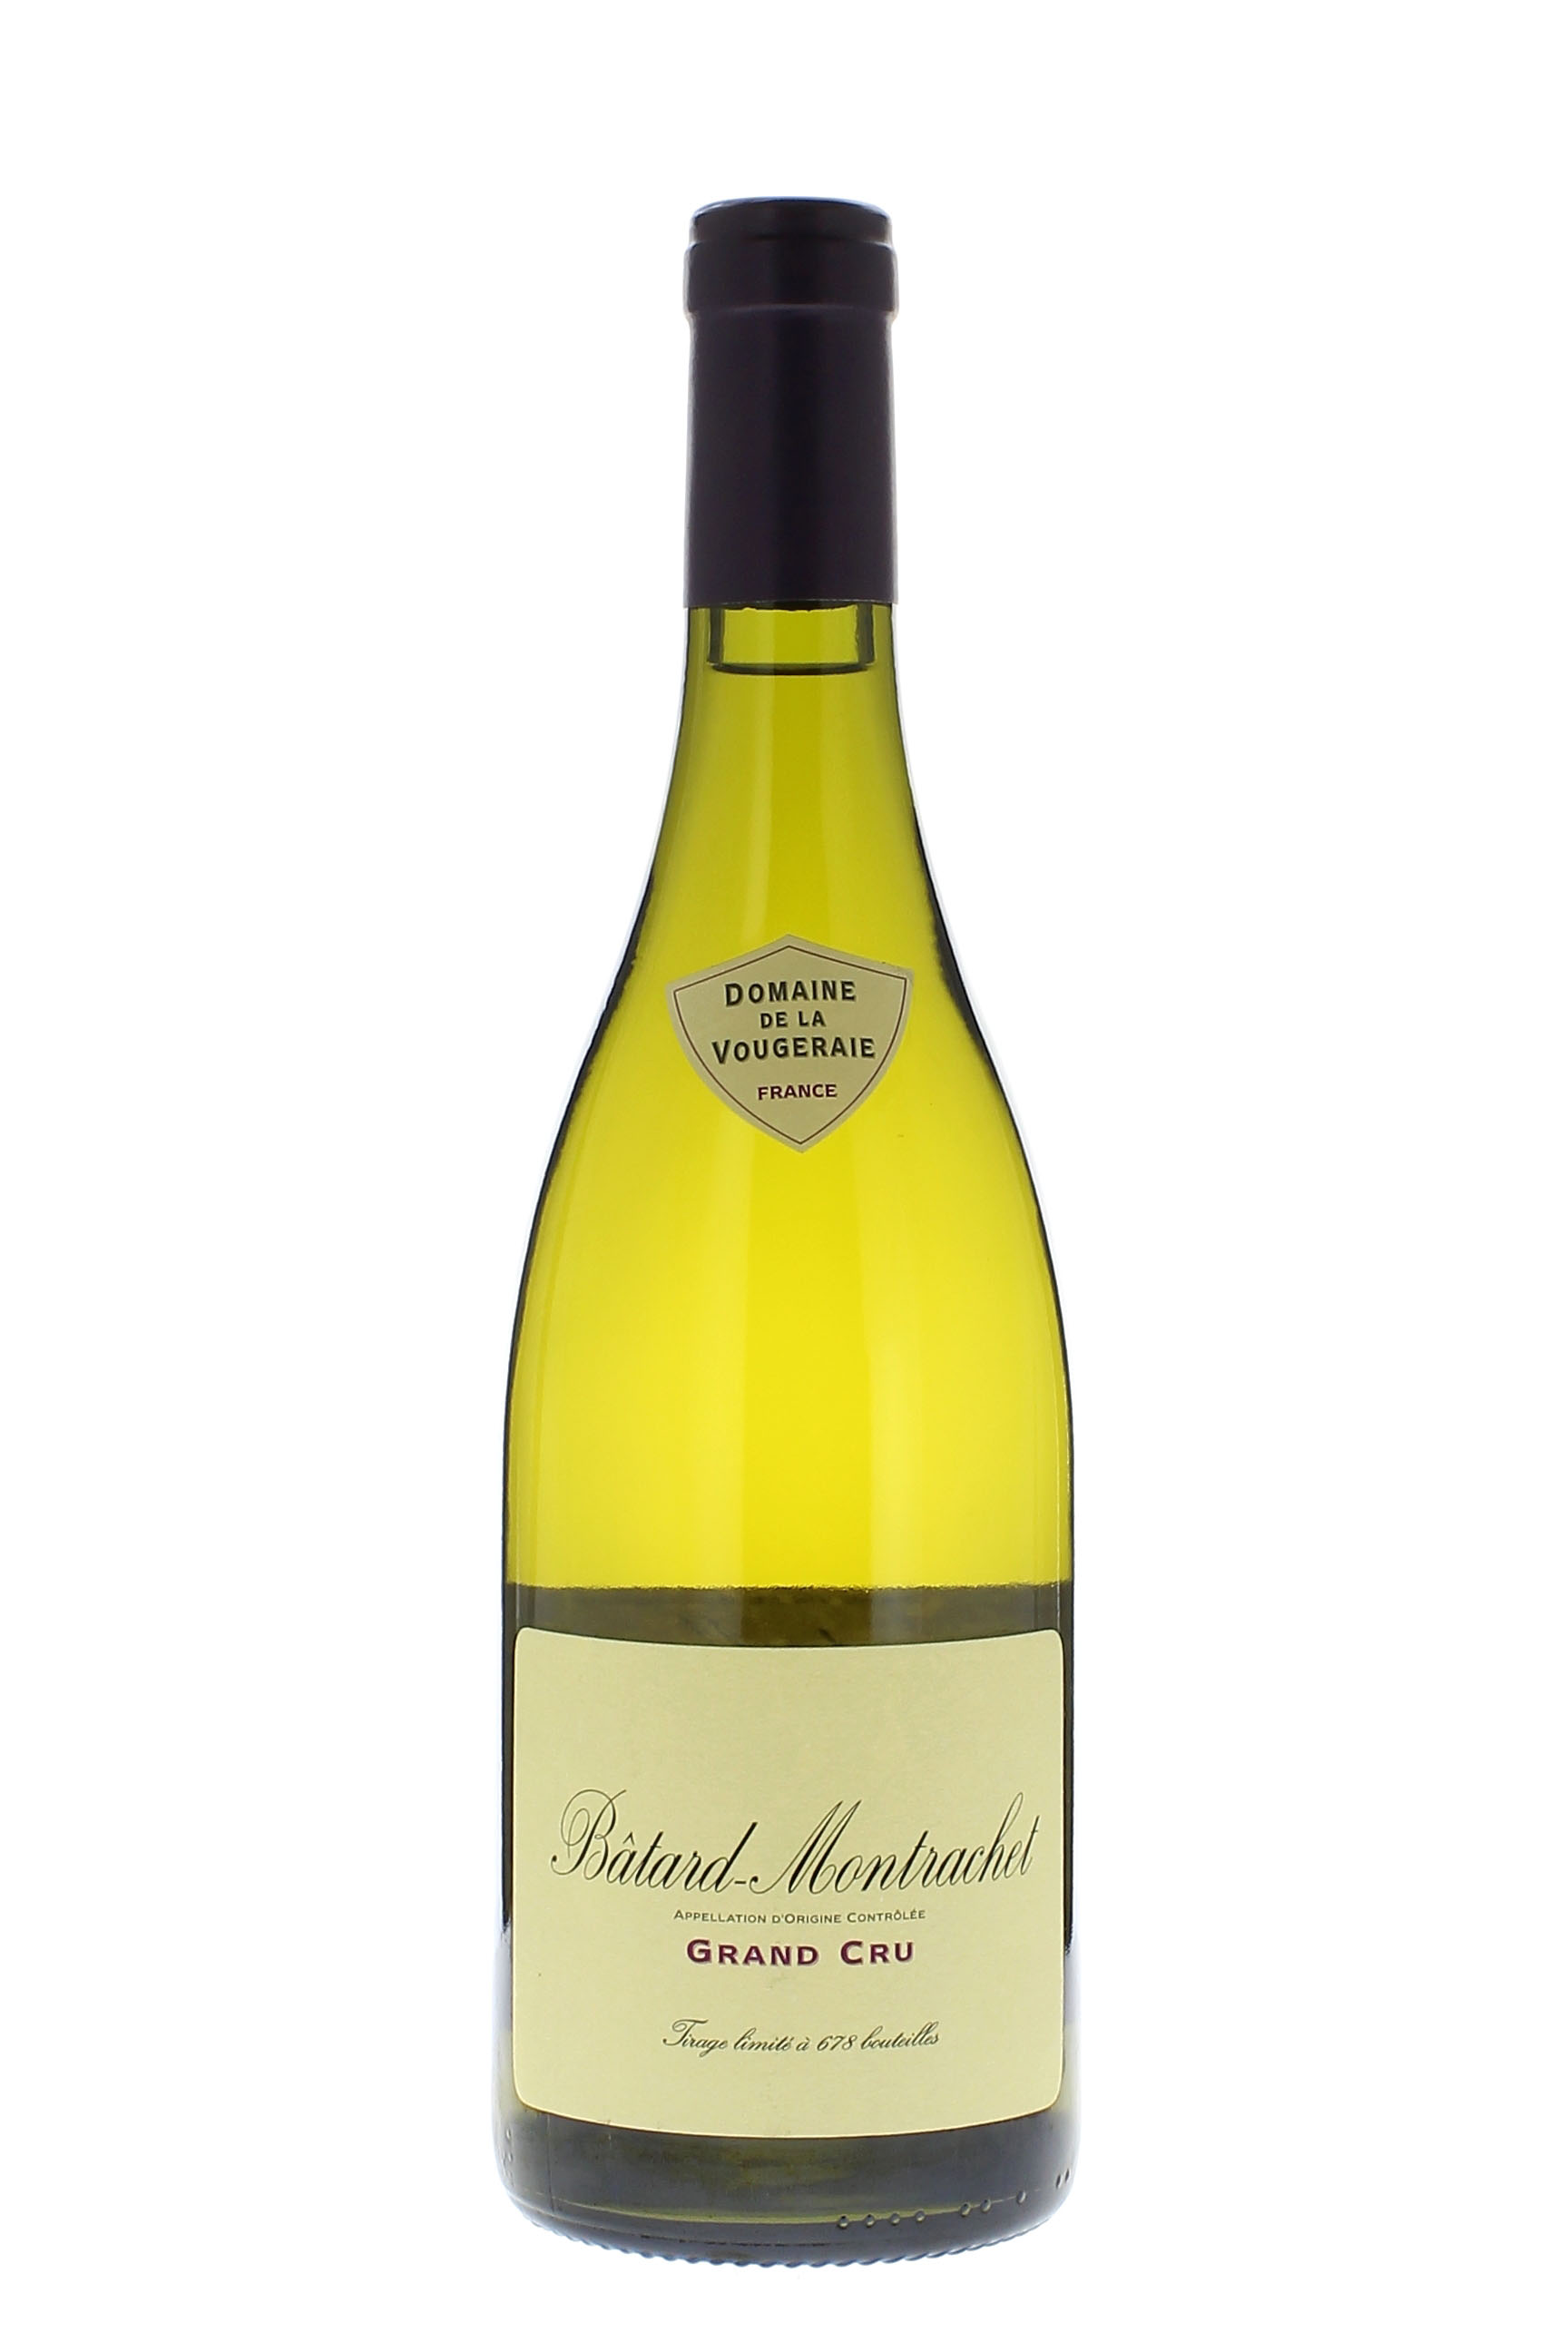 Batard montrachet grand cru 2015 Domaine VOUGERAIE, Bourgogne blanc